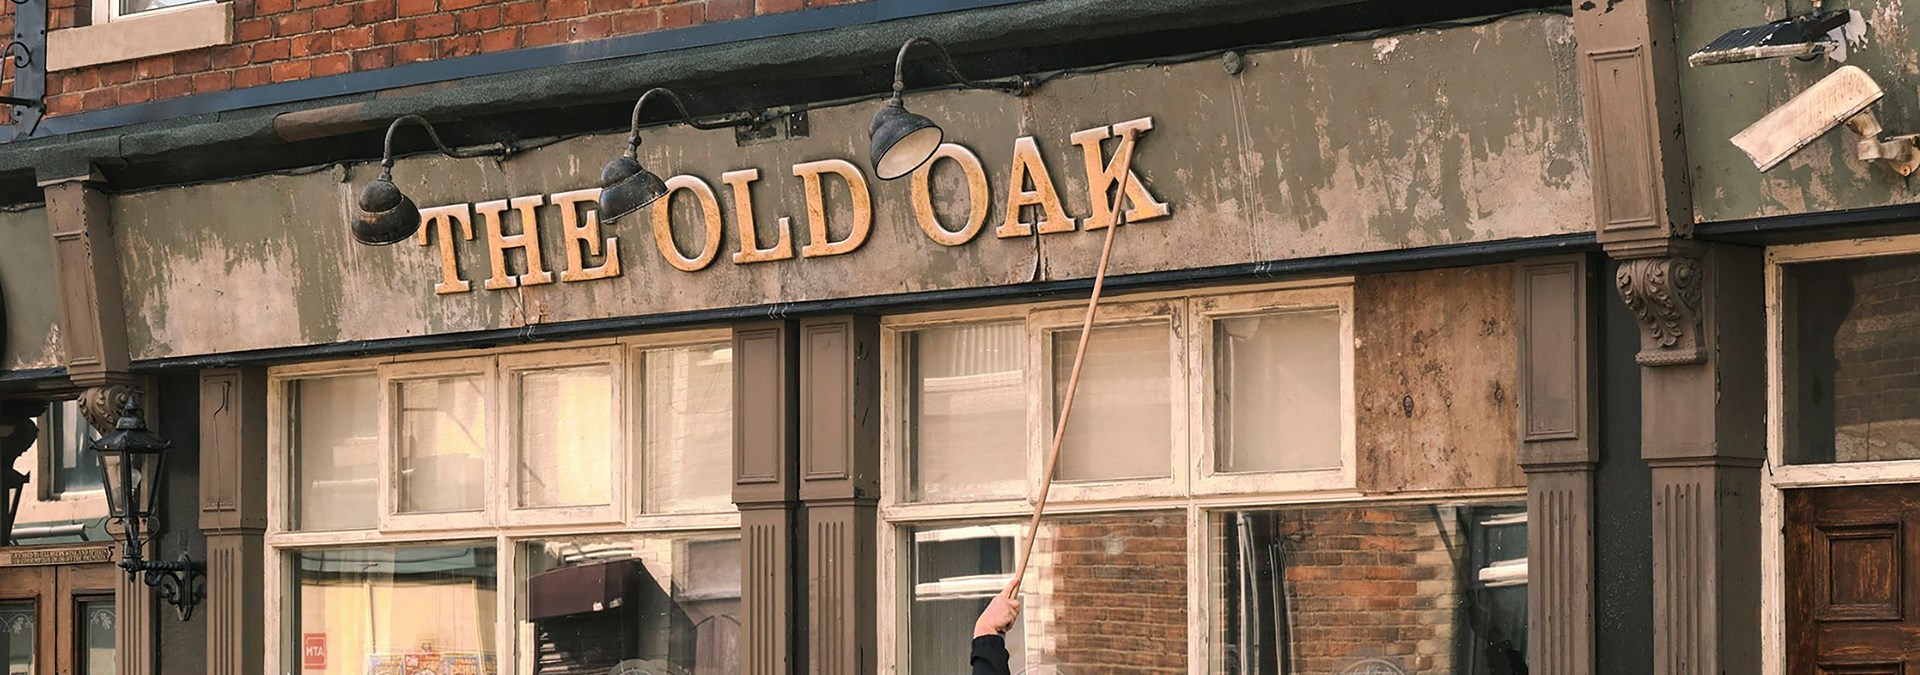 The Old Oak St 2 Jpg Sd High Cinema Amstelveen (1)